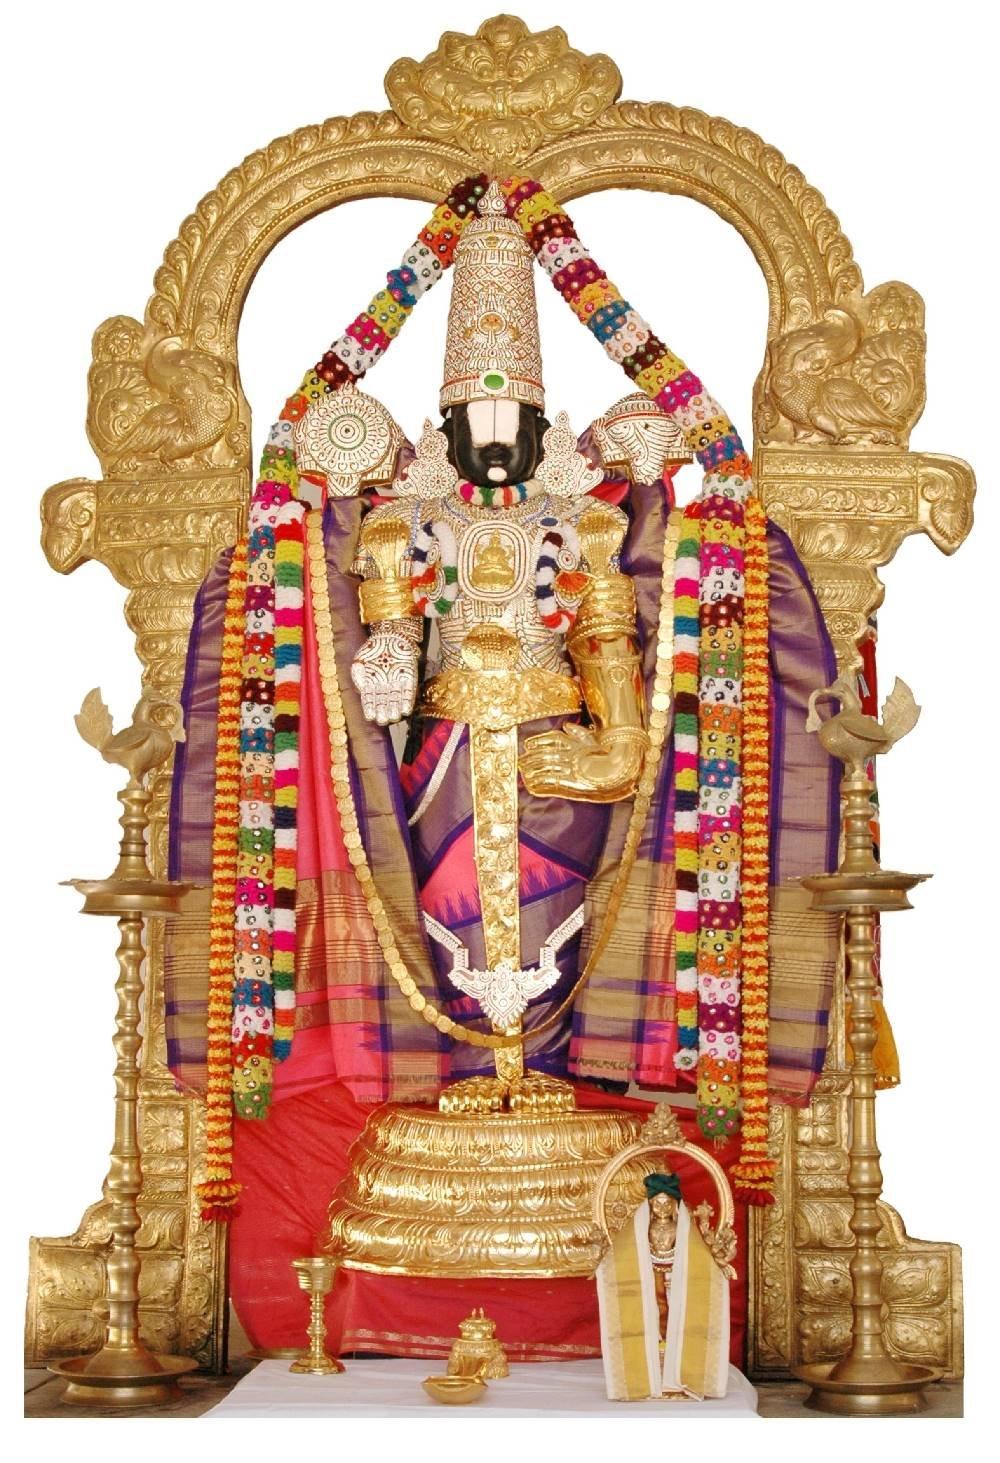 Lord Venkateswara Photo Gallery. Balaji Wallpaper. Tirupati